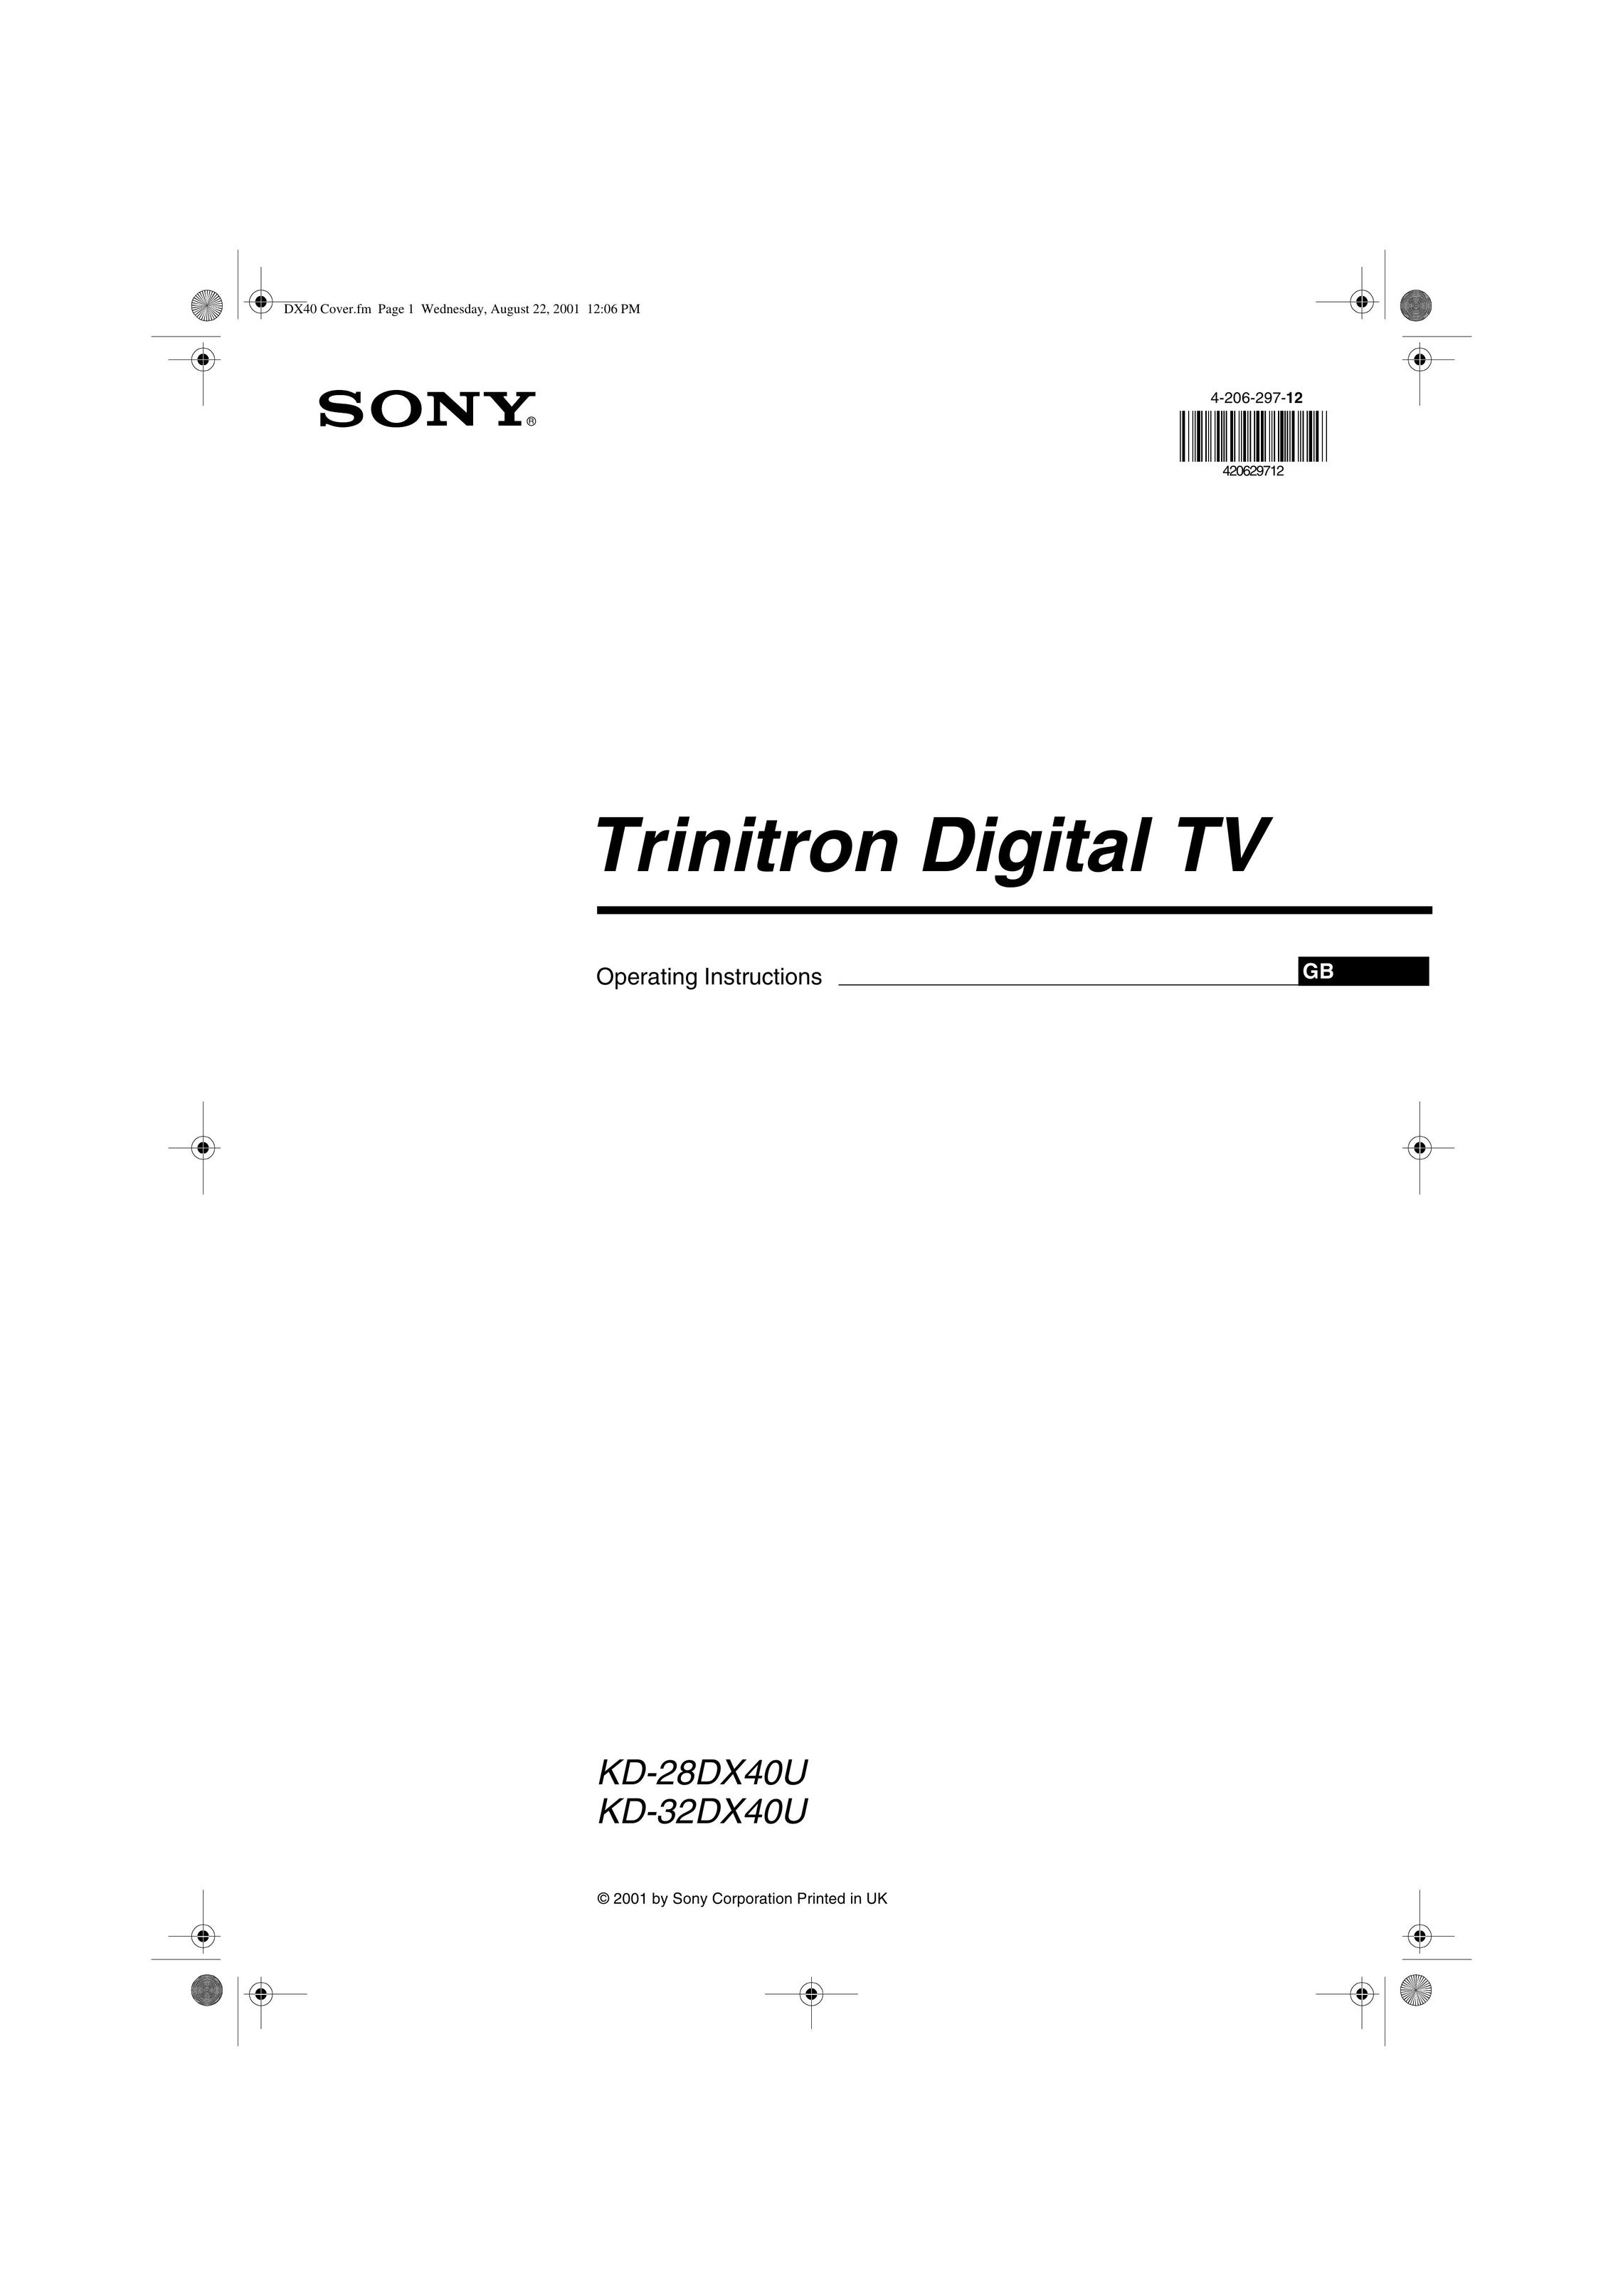 Sony KD-32DX40U TV Receiver User Manual